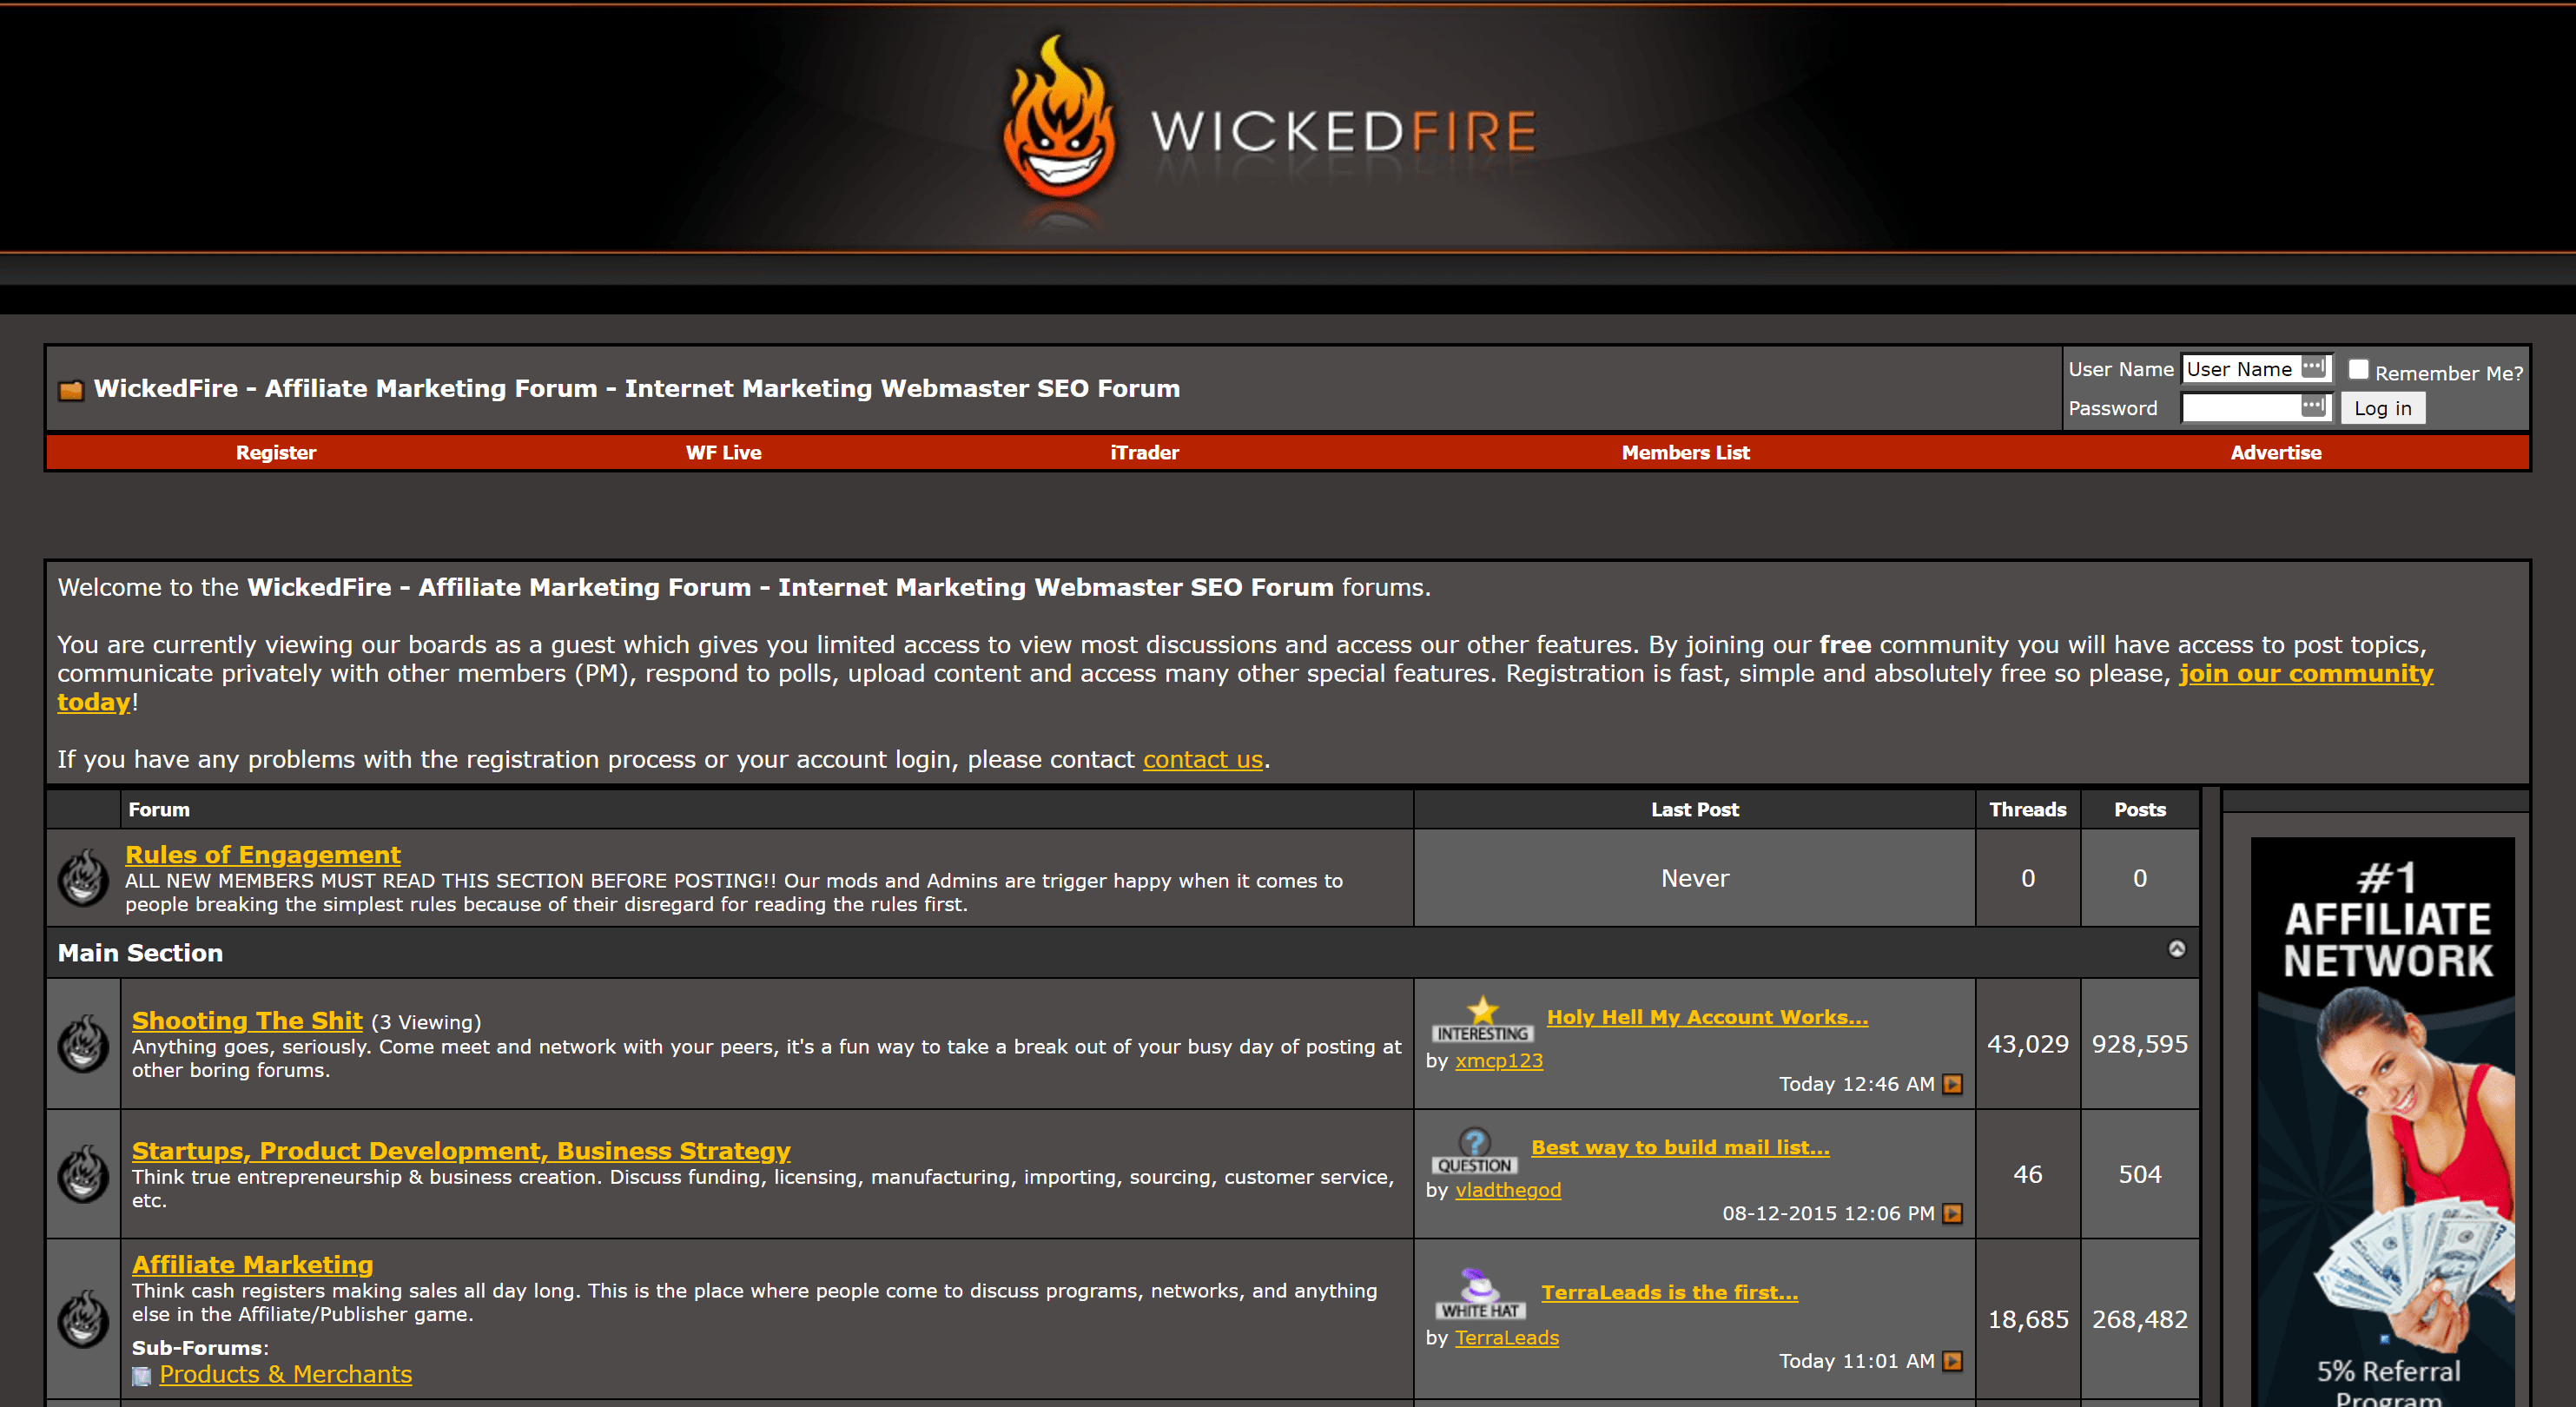 Wickedfire affiliate marketing forum